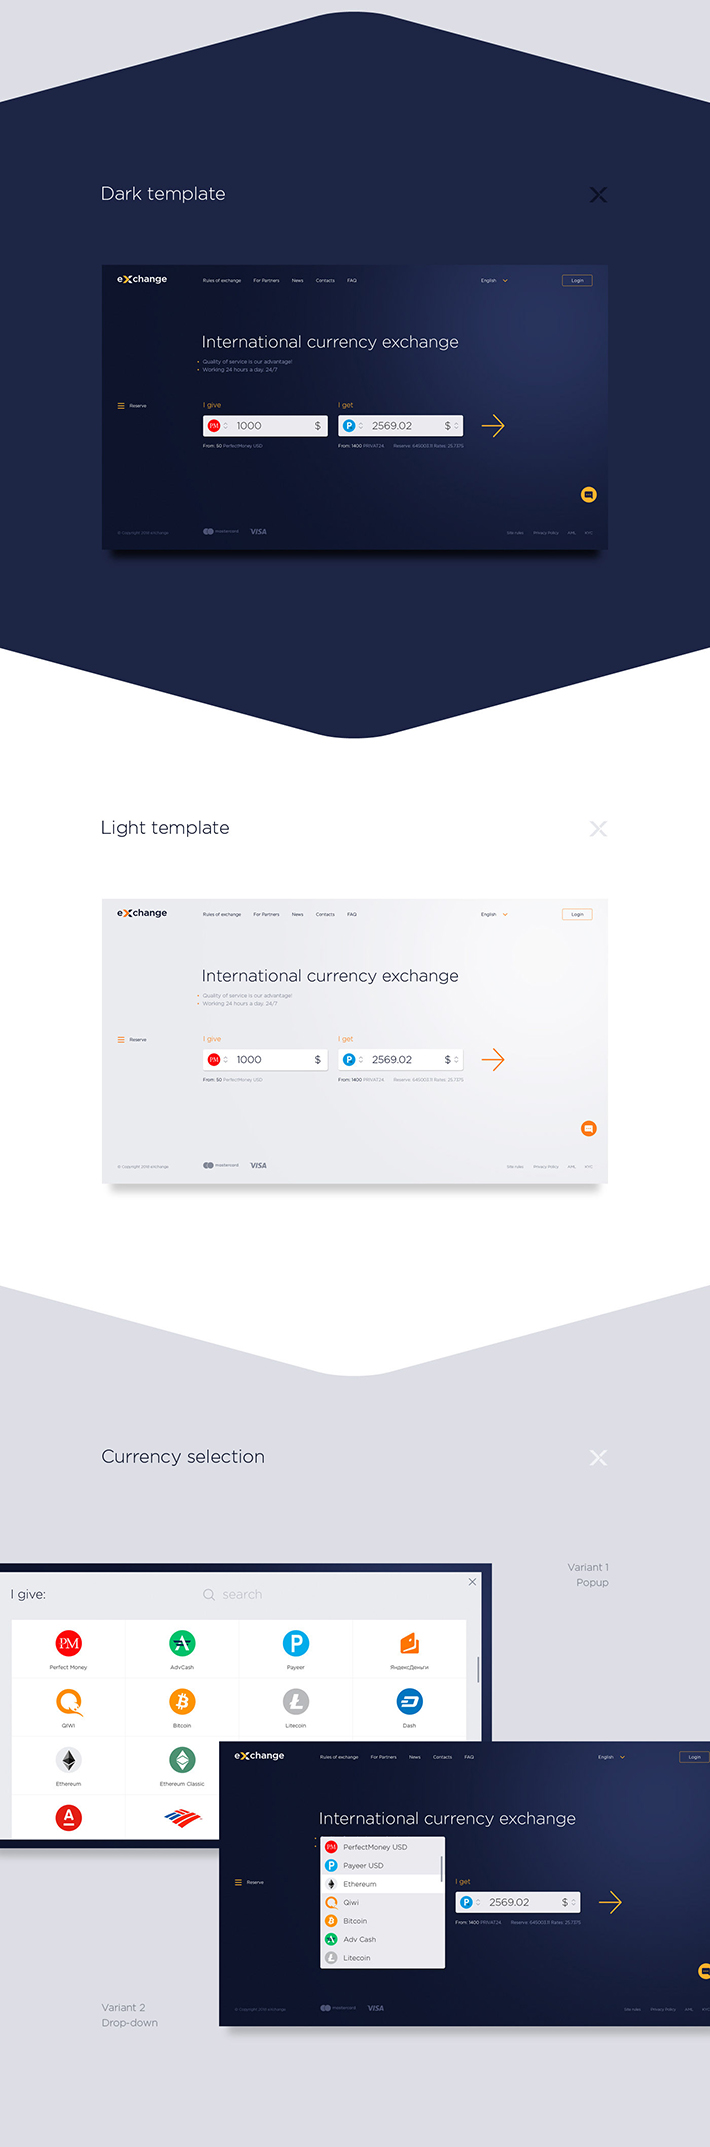 Currency exchange Web Designing